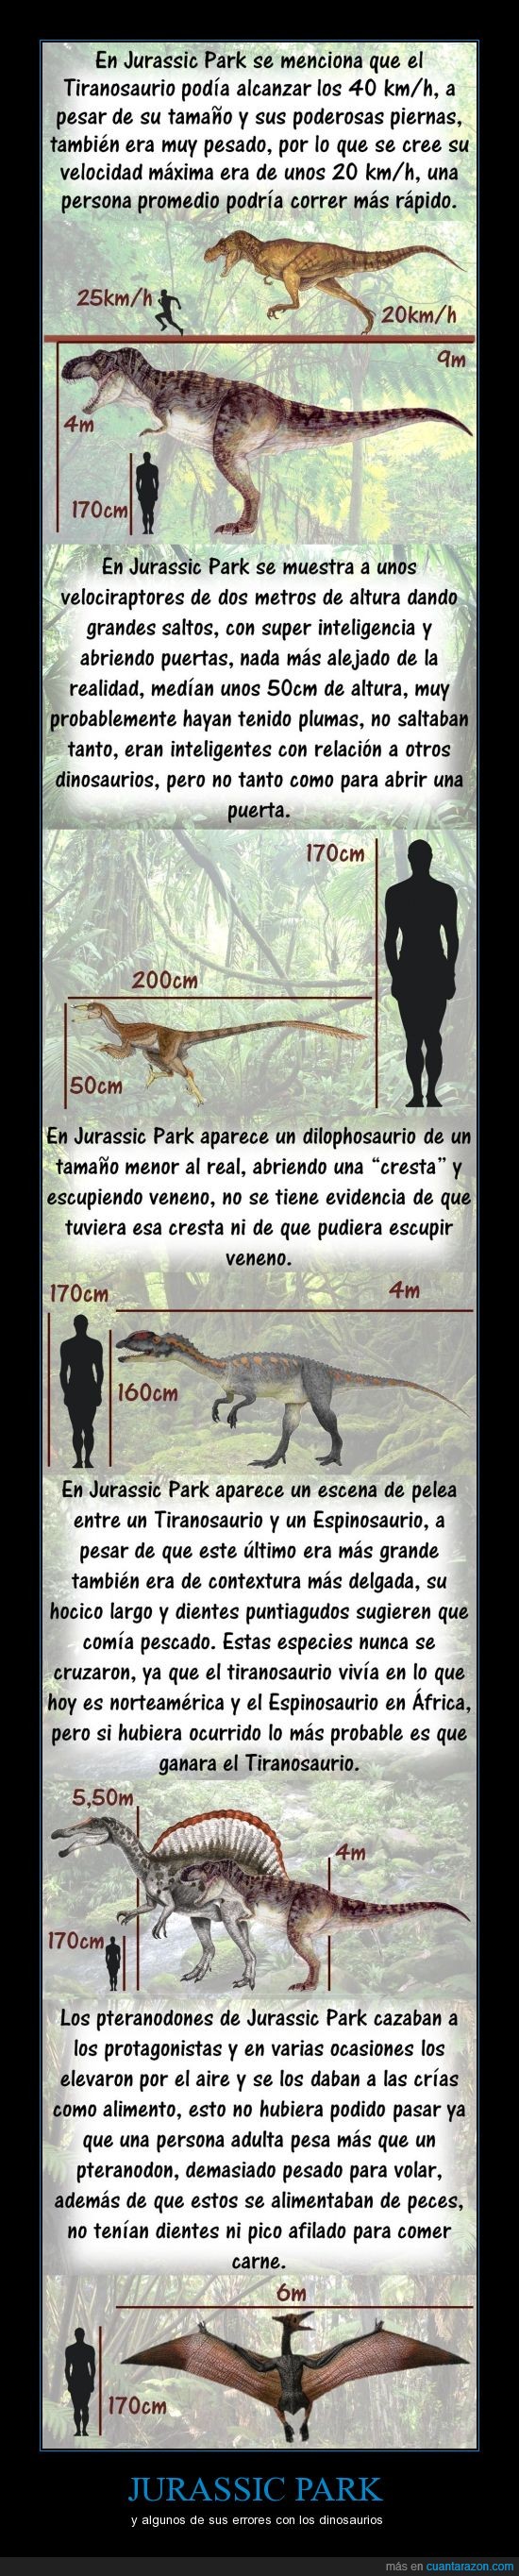 dinosaurios,película,jurassic park,gigante